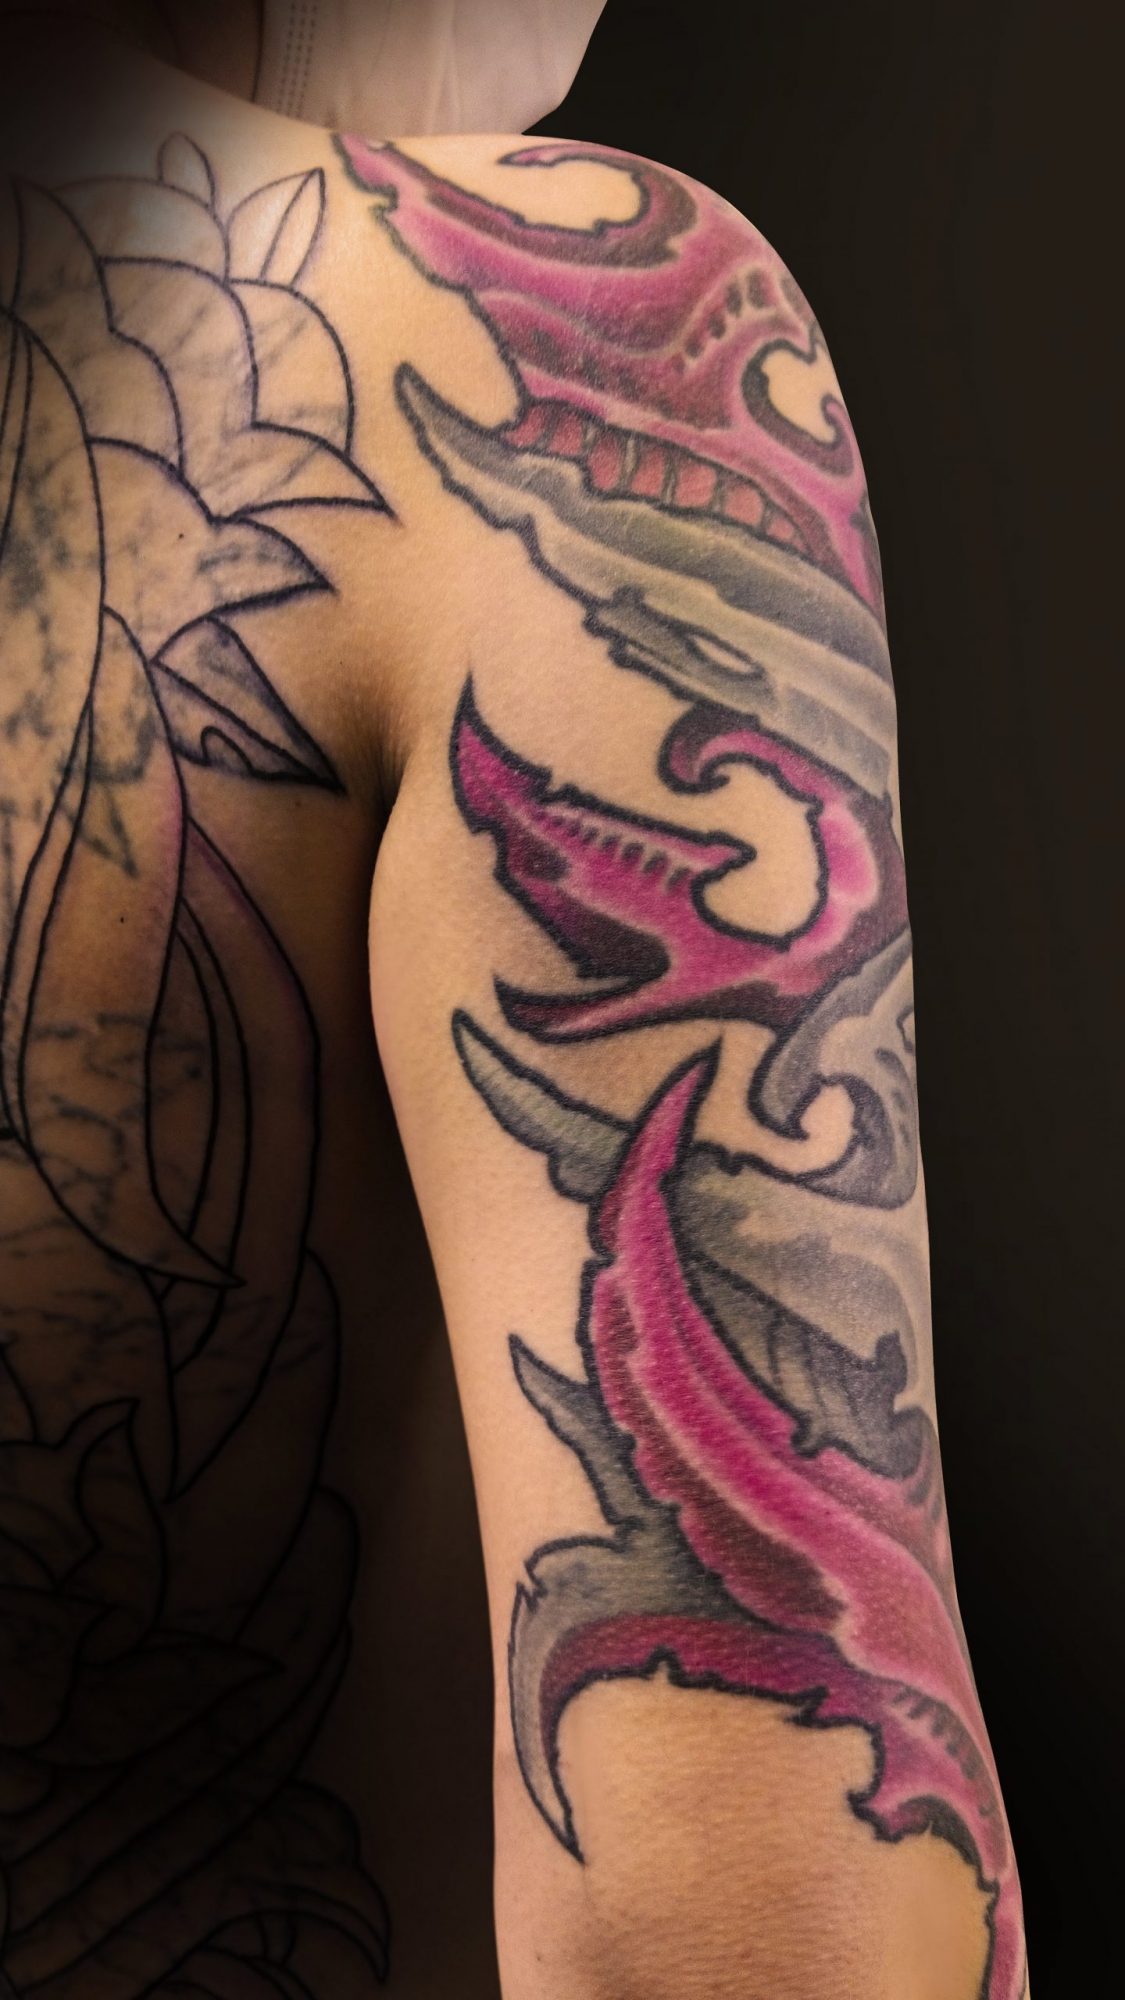 KINGRAT TATTOO 作品 | LAVA gallery | Tattoo artist: Yuji Anai | キングラット | ラバギャラリー | タトゥーアート | 福岡県北九州市 | KIMG8890